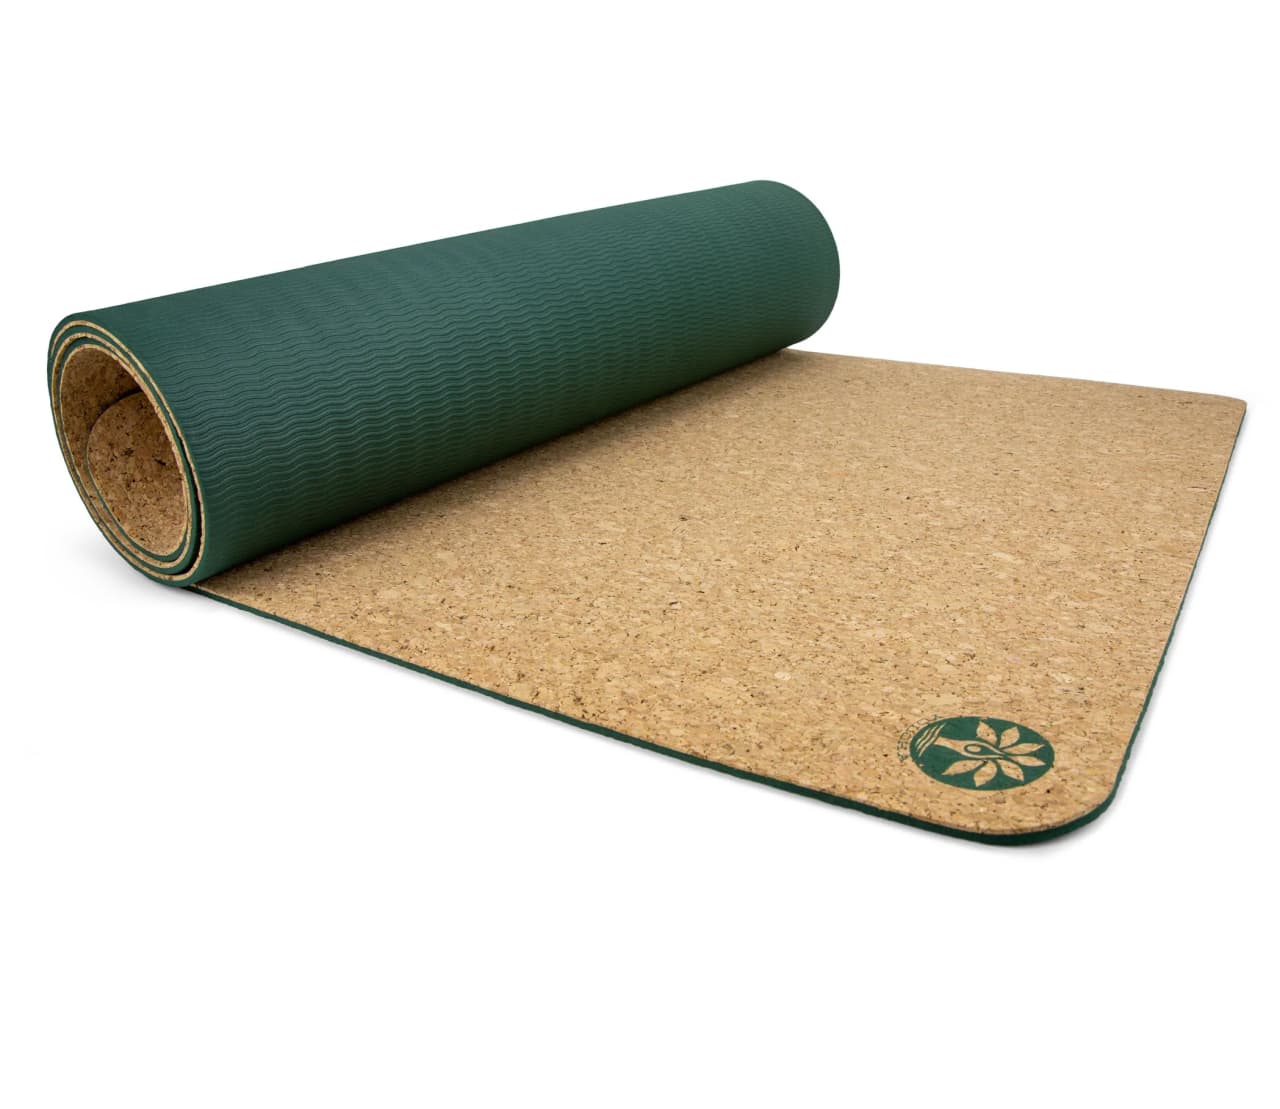 Logo-print yoga mat and carry strap